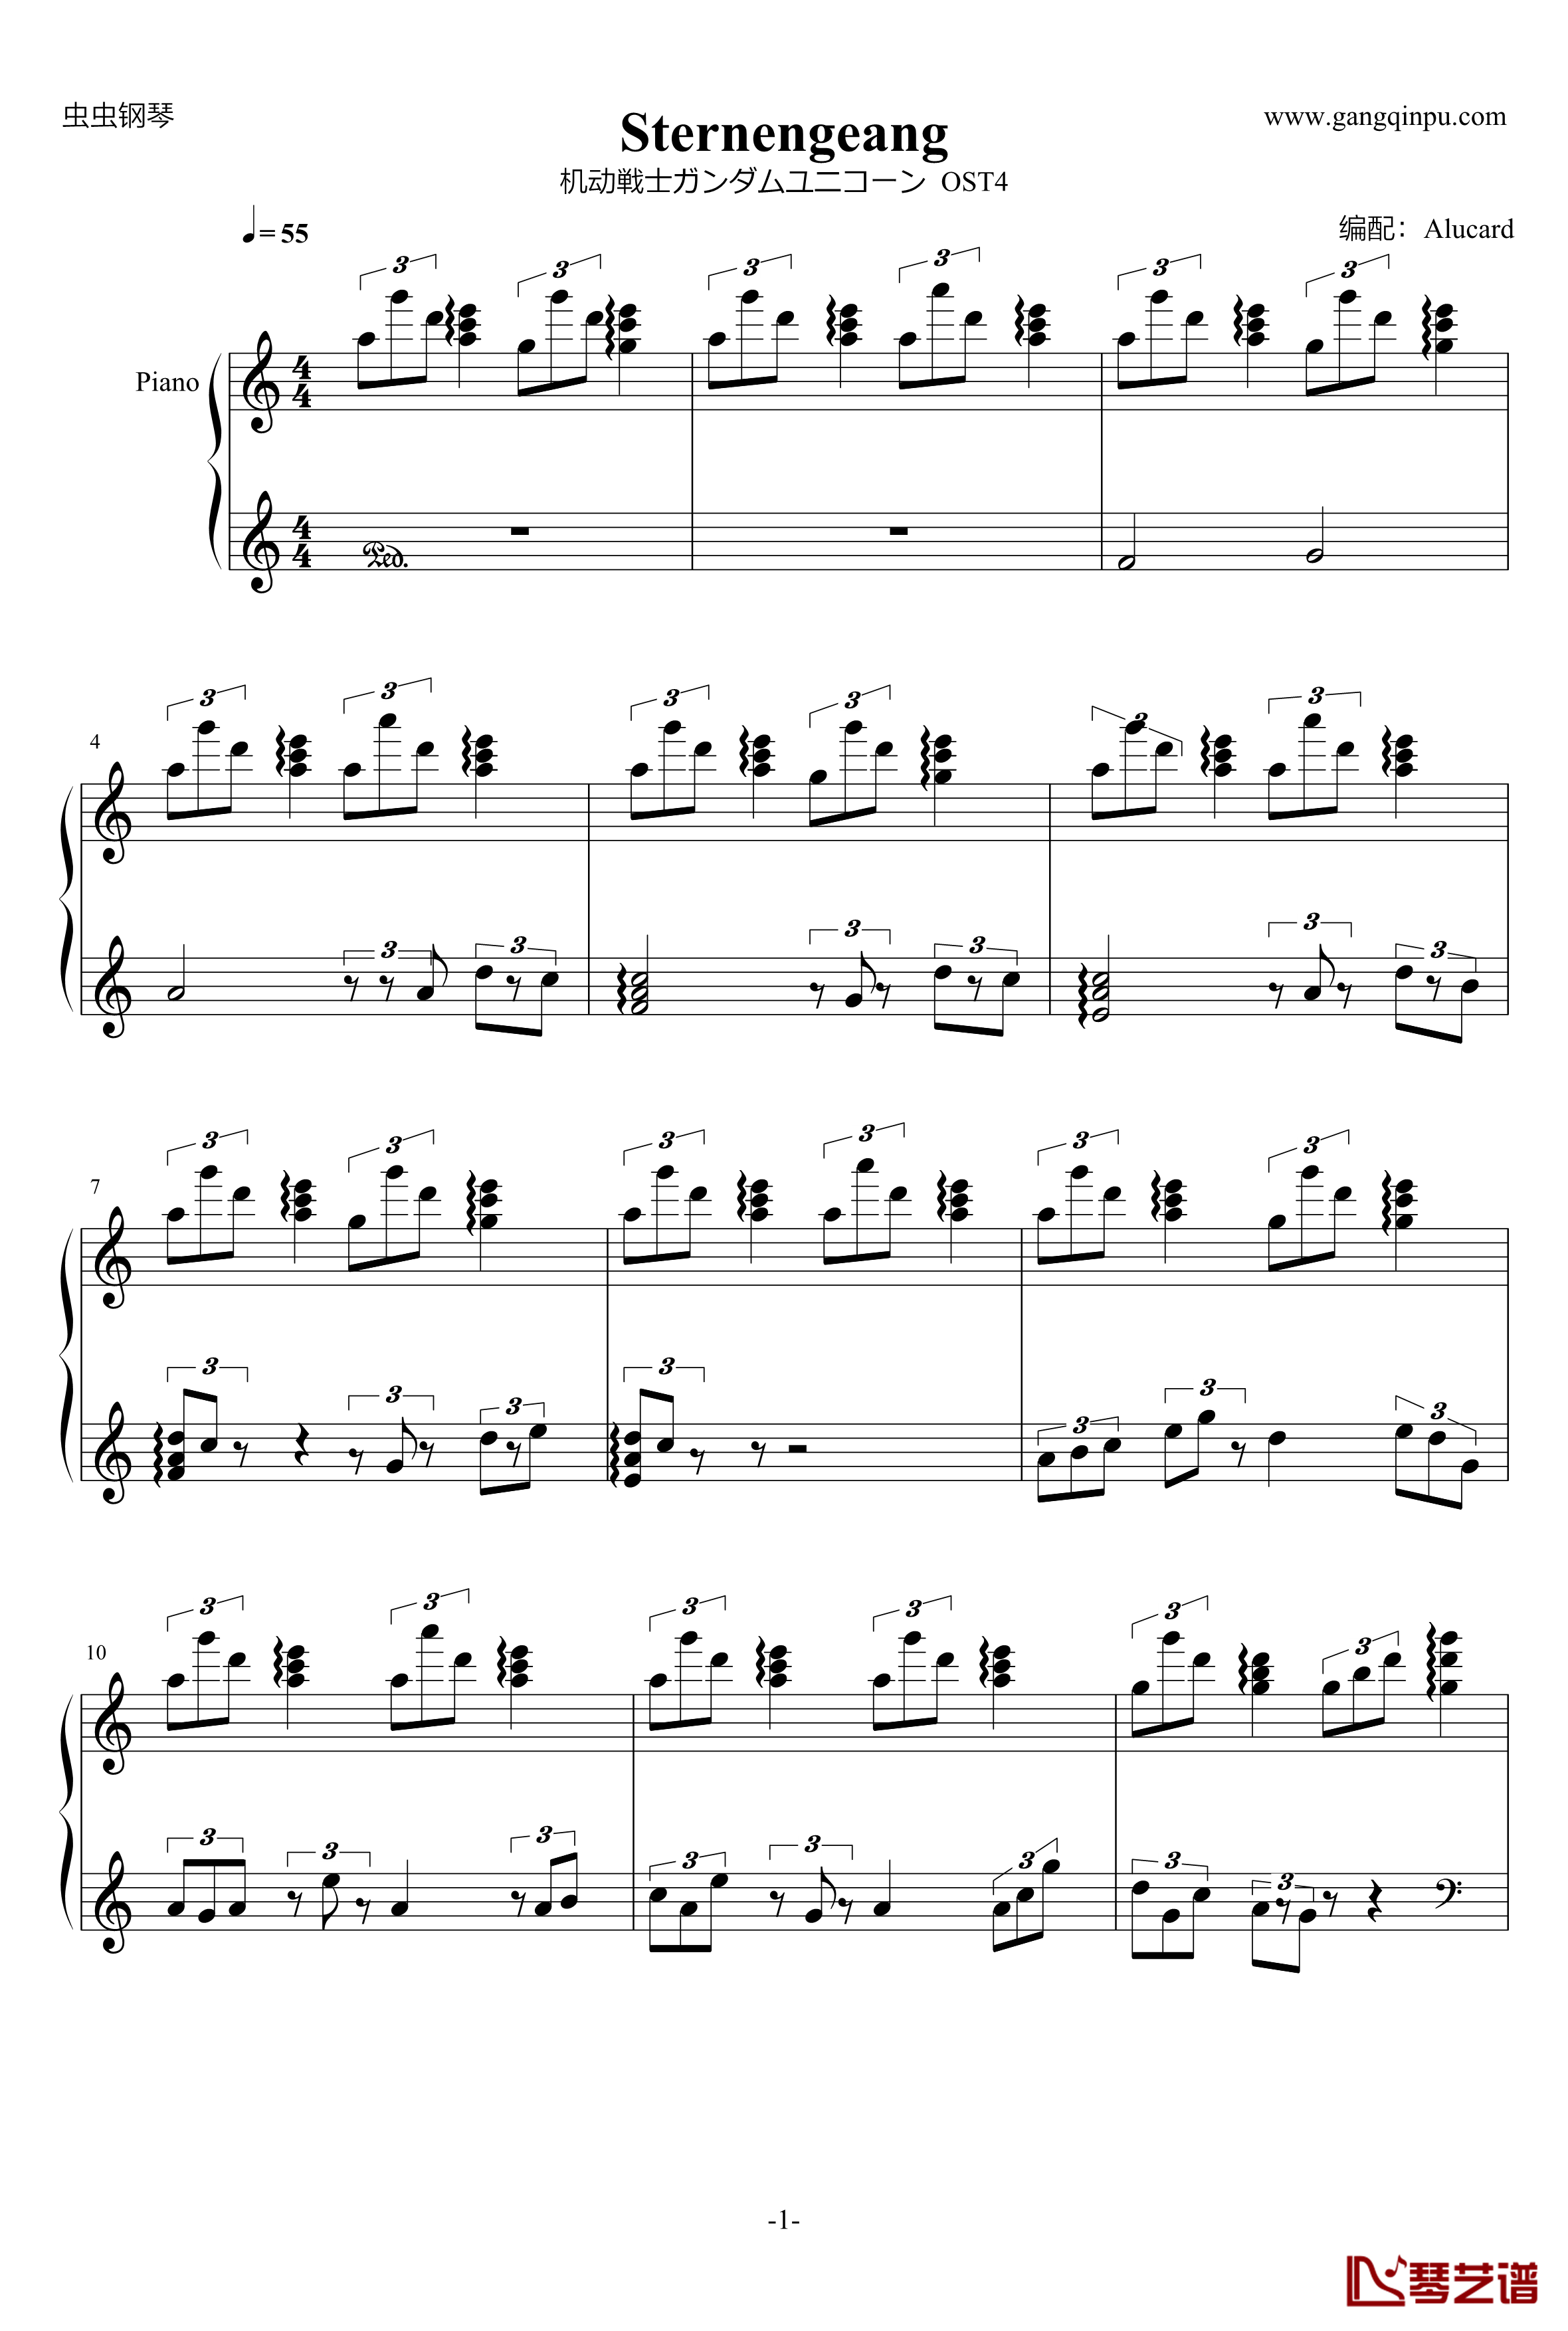 Sternengeang钢琴谱-机动戦士ガンダムユニコーン OST4-机动战士